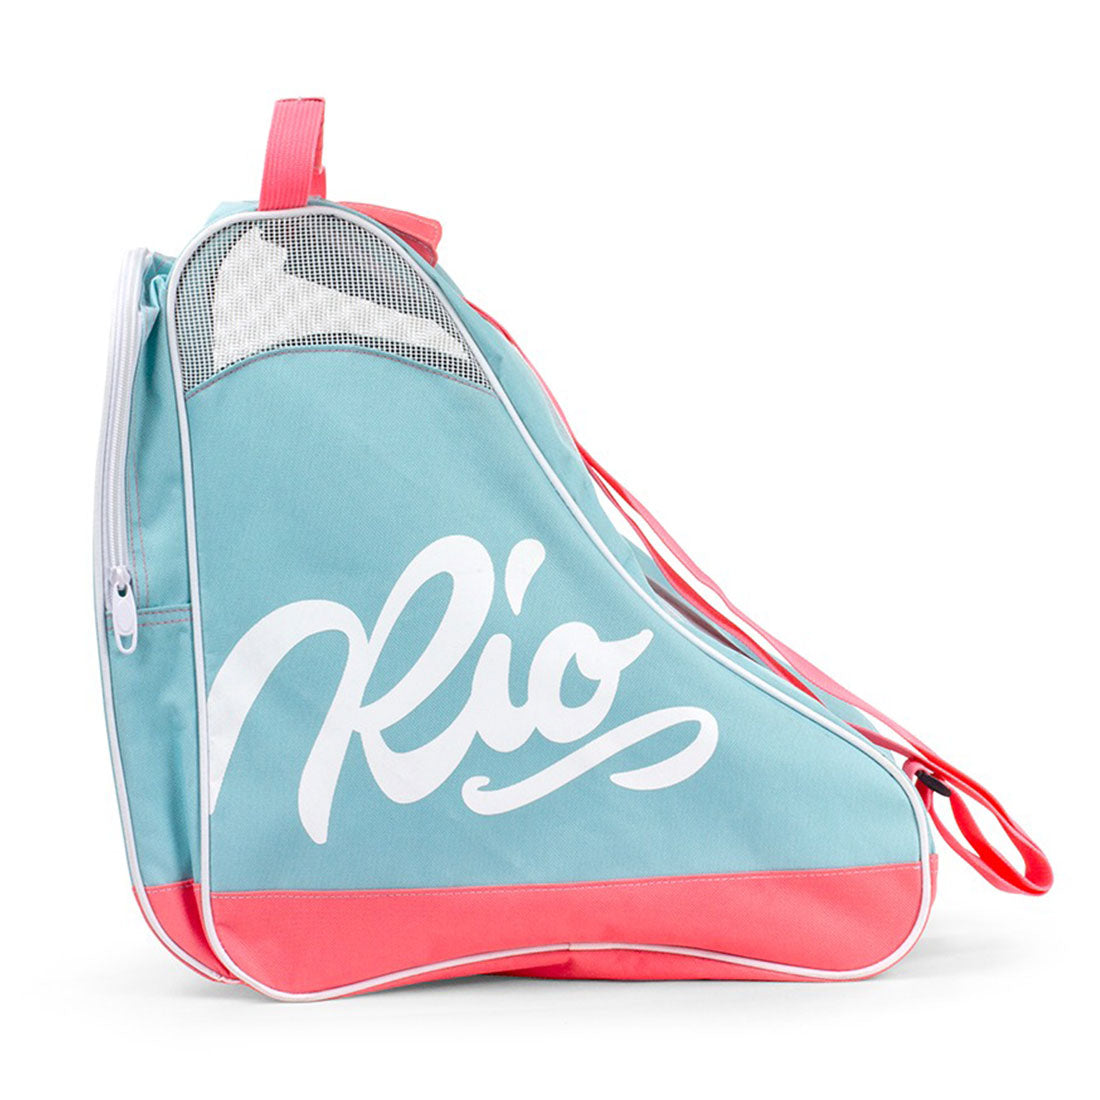 Rio Roller Script Skate Bag - Teal/Coral Bags and Backpacks